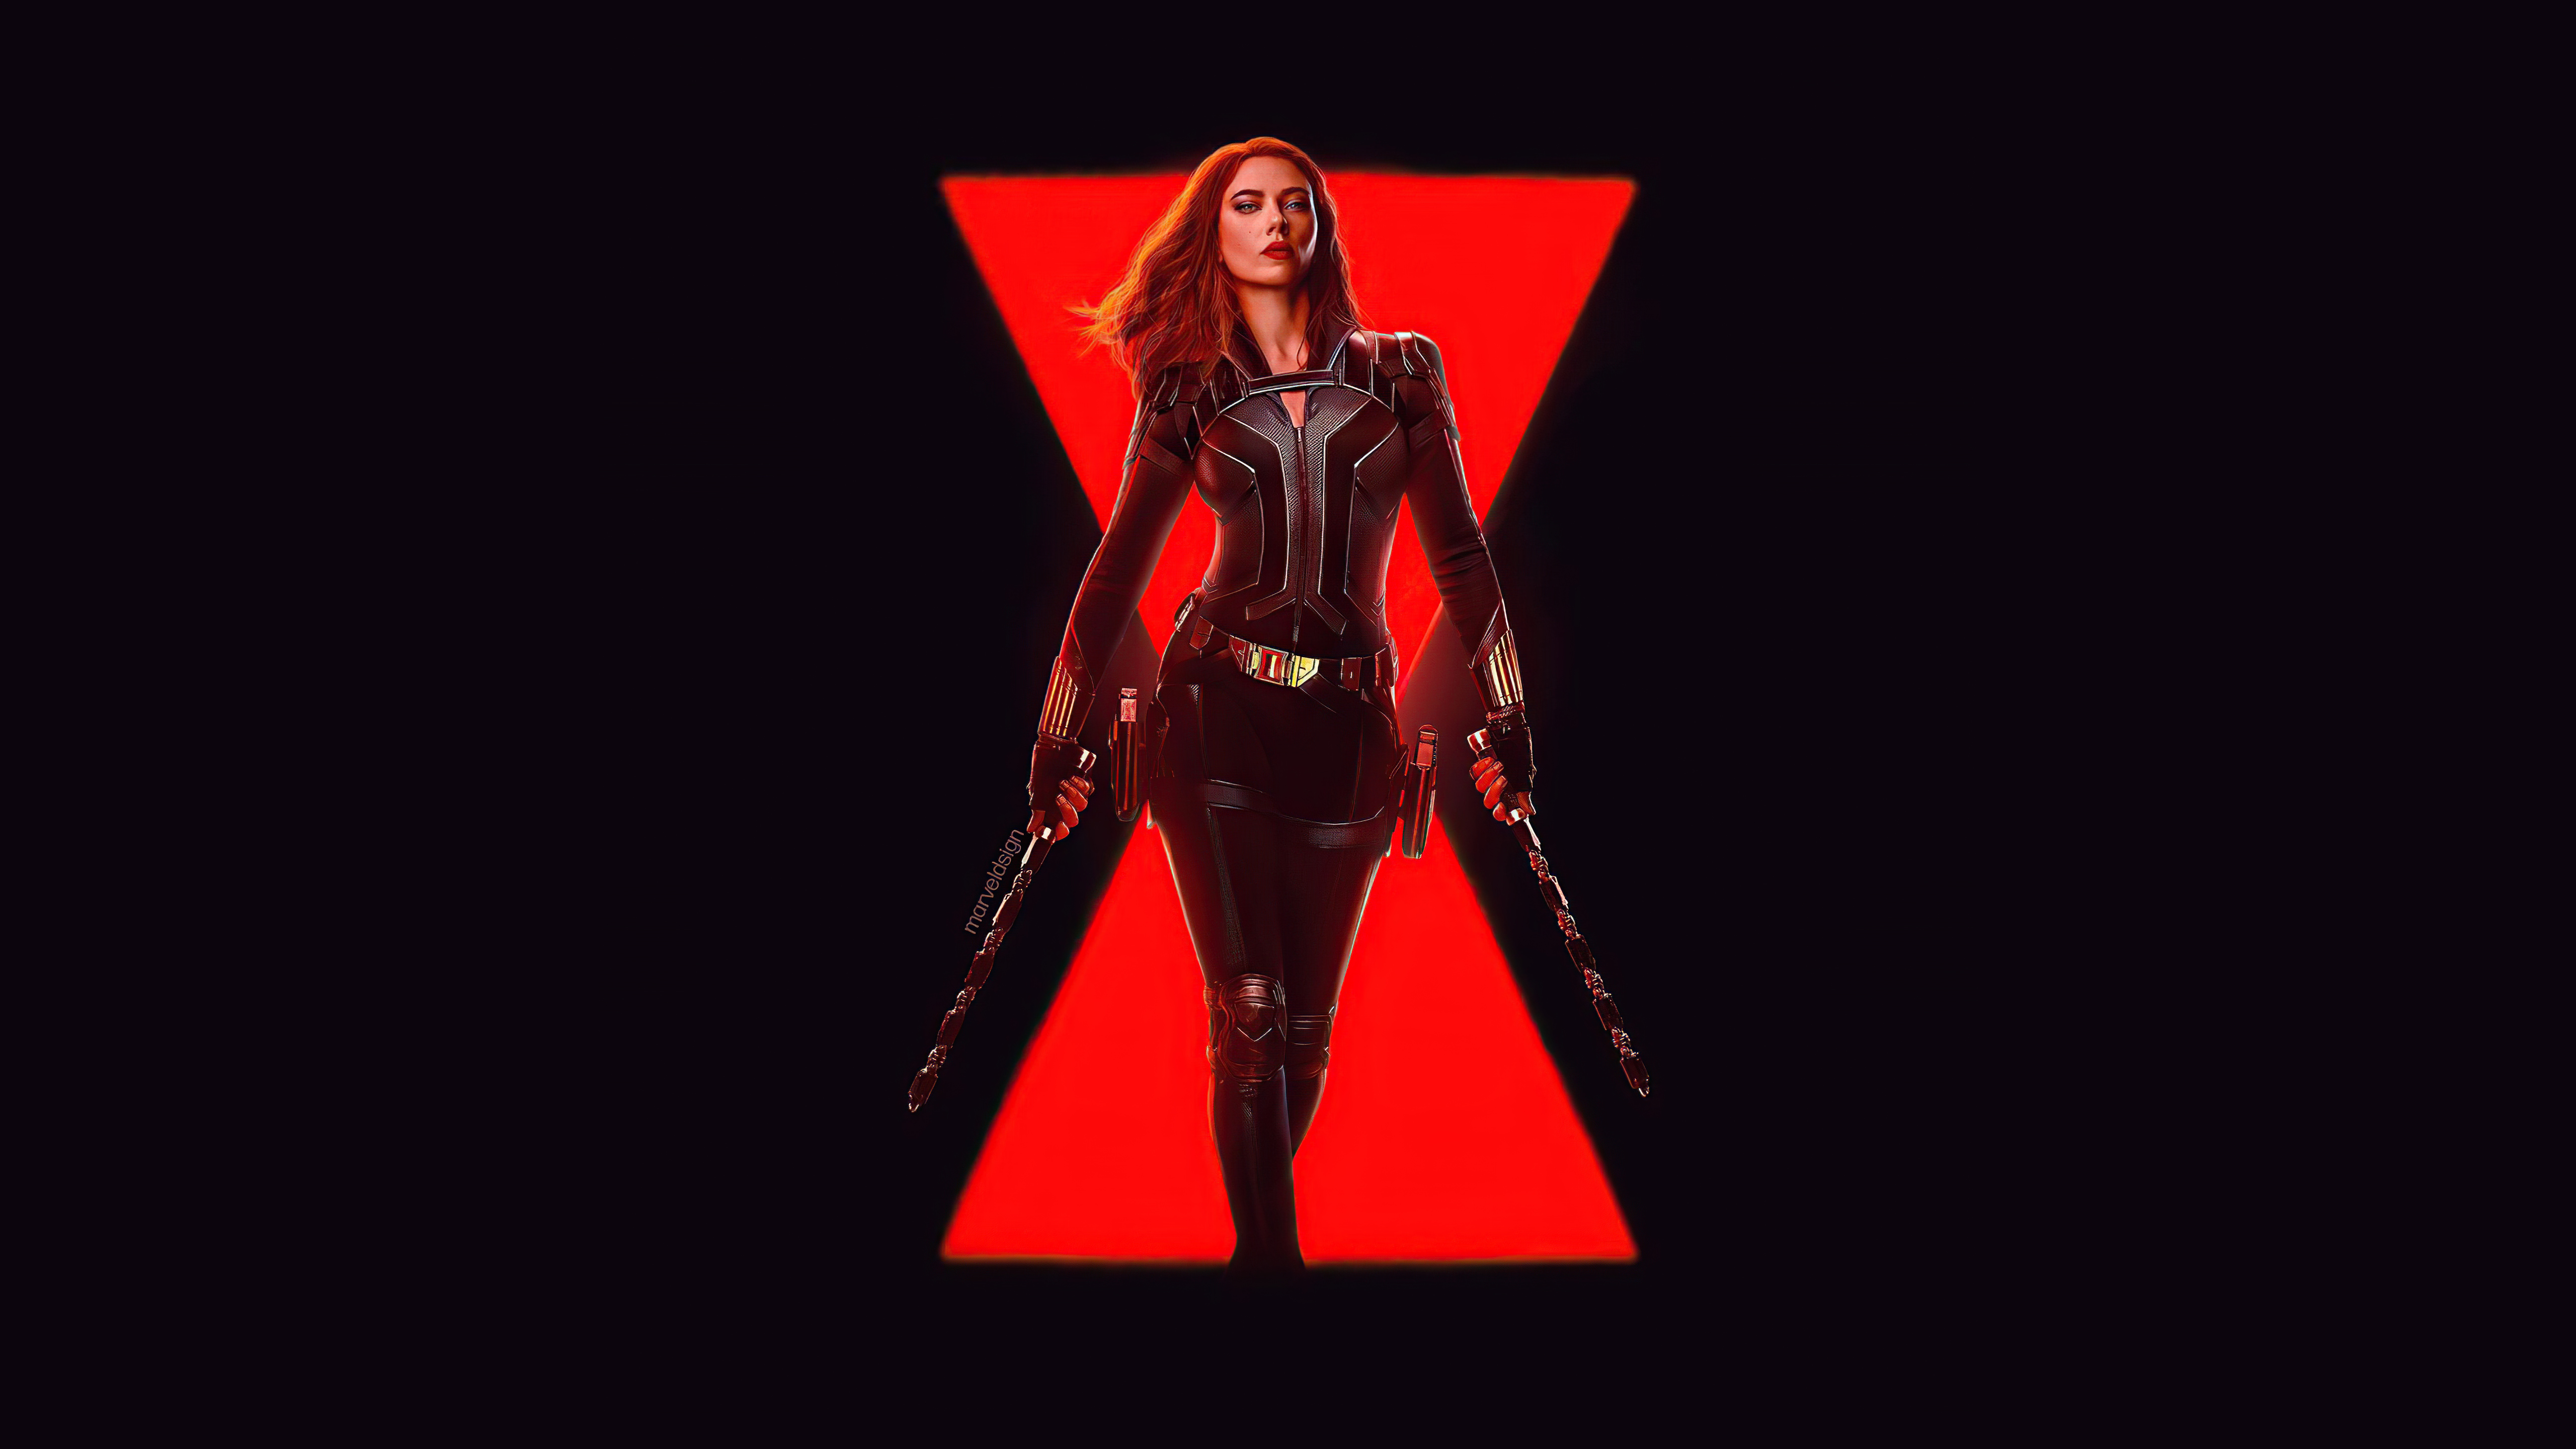 Movie Black Widow HD Wallpaper | Background Image